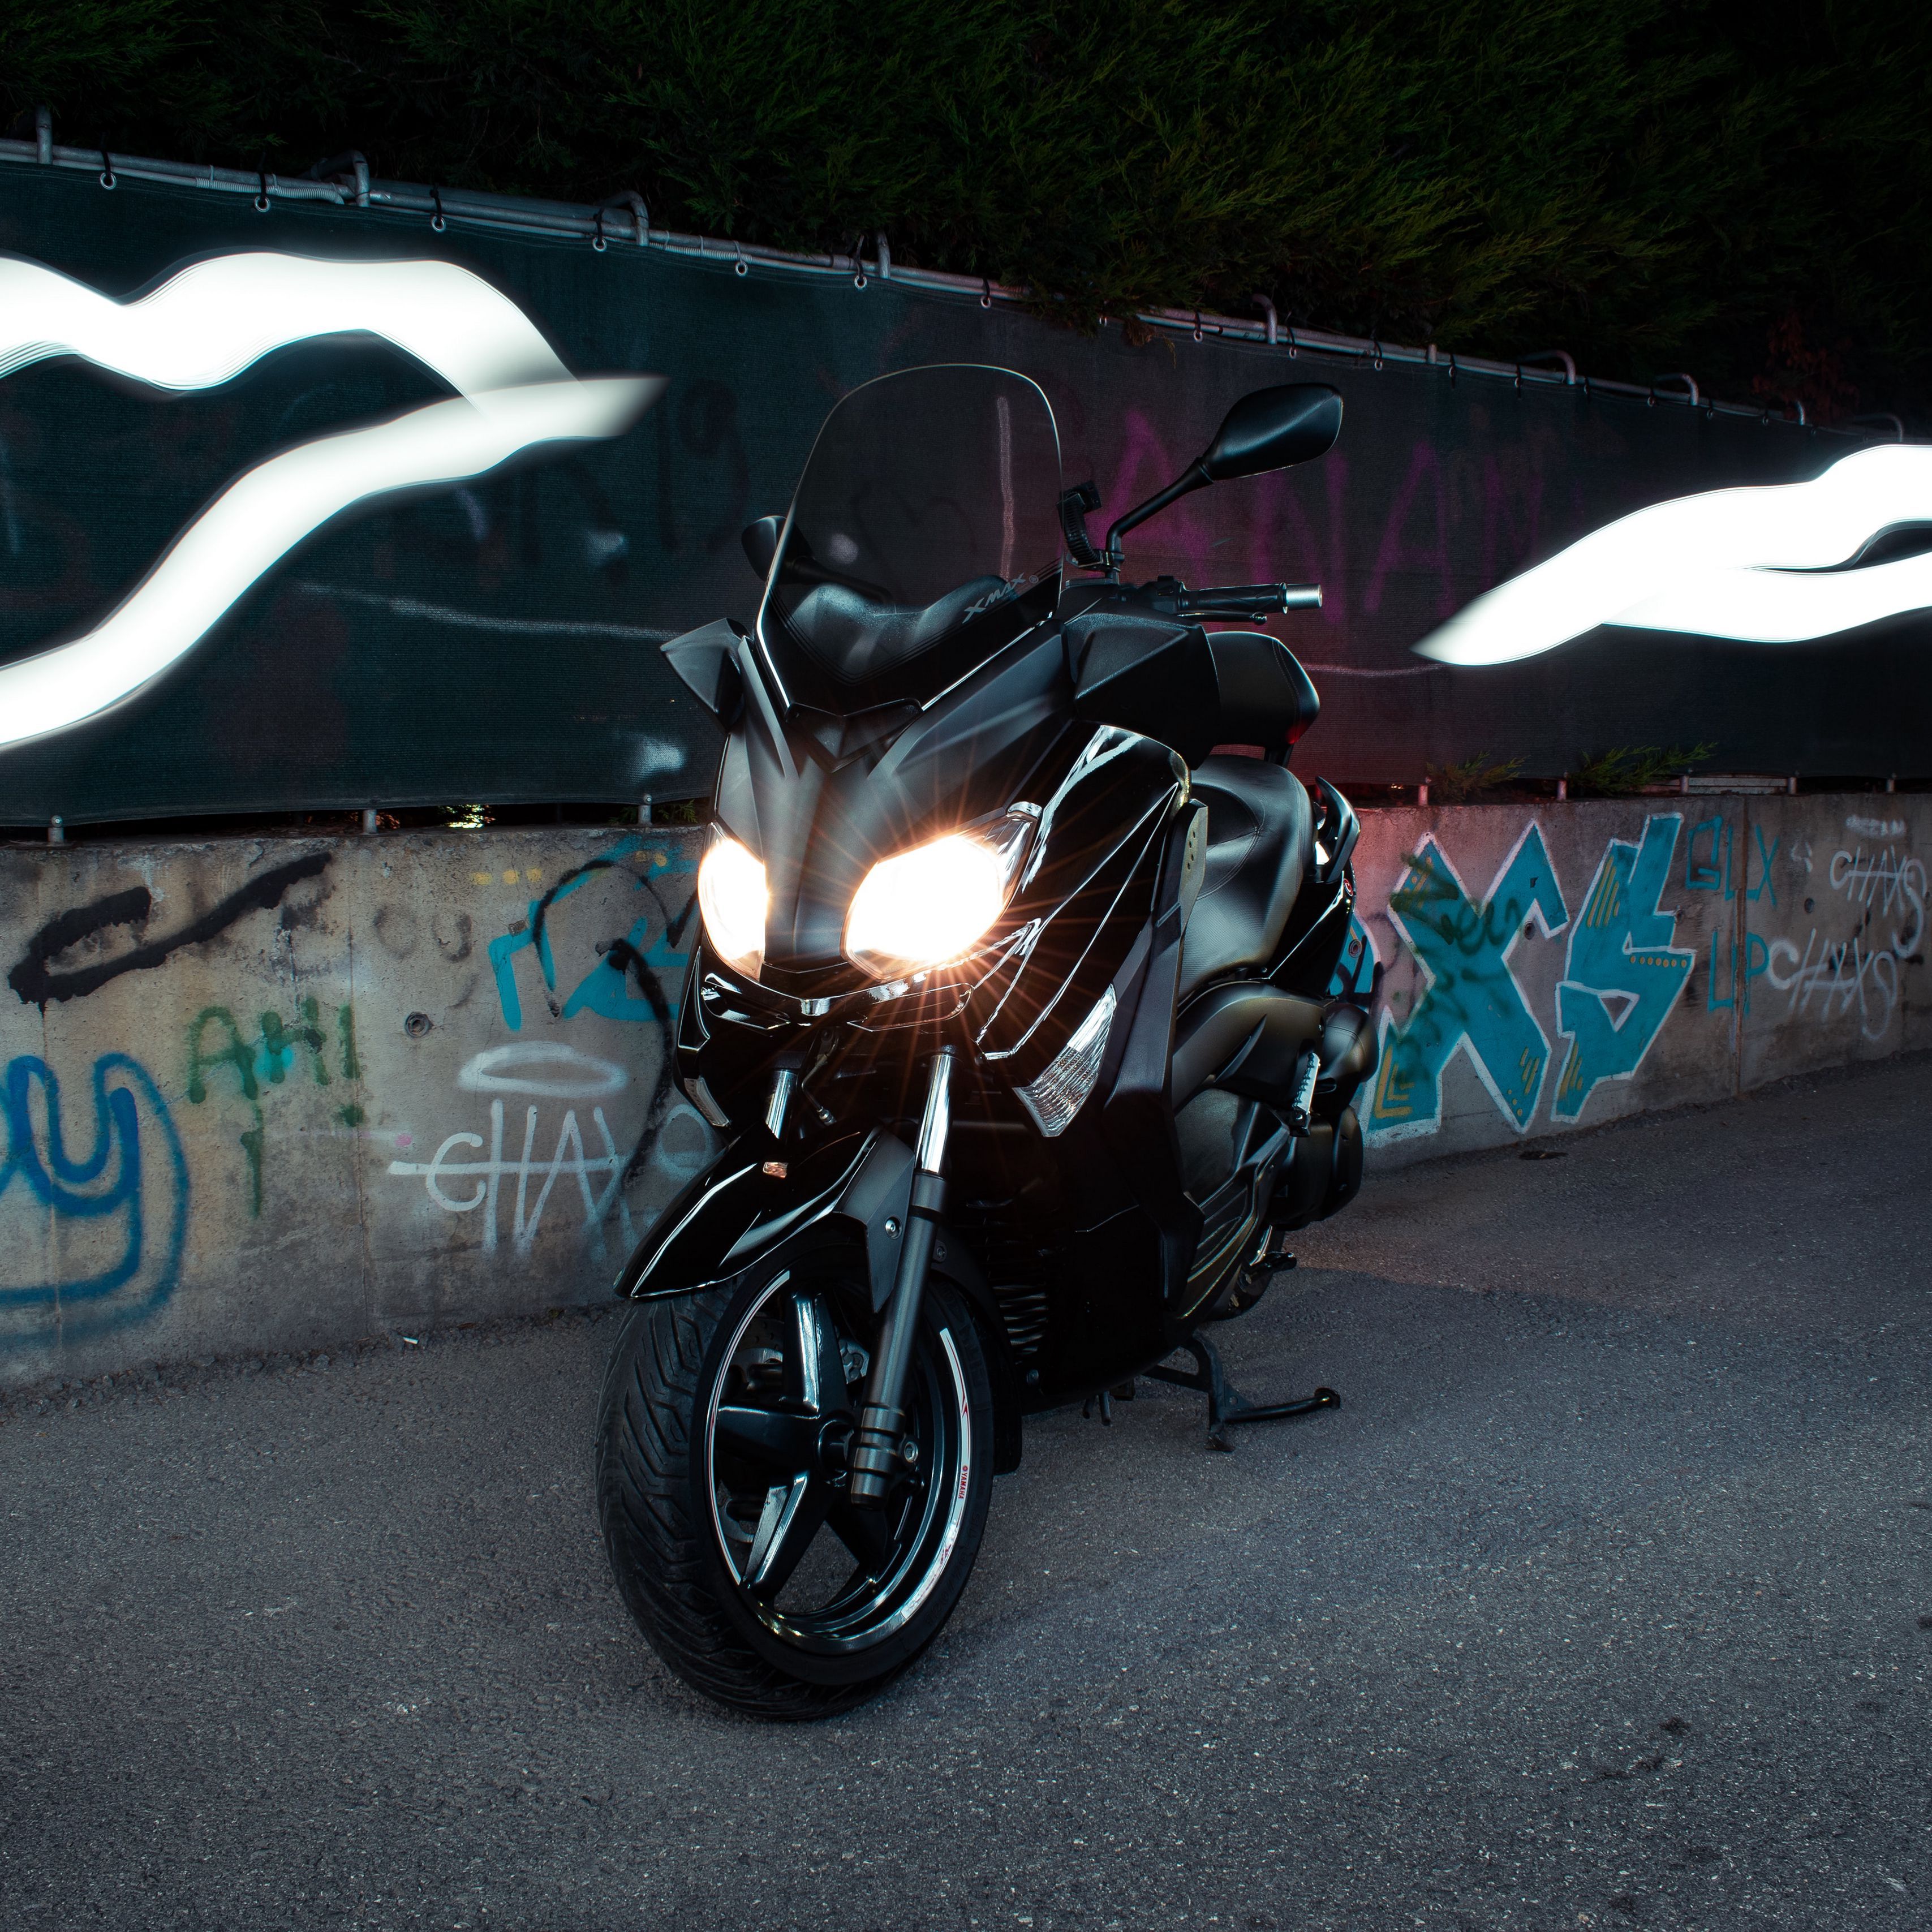 Download wallpaper 3415x3415 motorcycle, bike, headlights, glow, black ipad pro 12.9 retina for parallax HD background